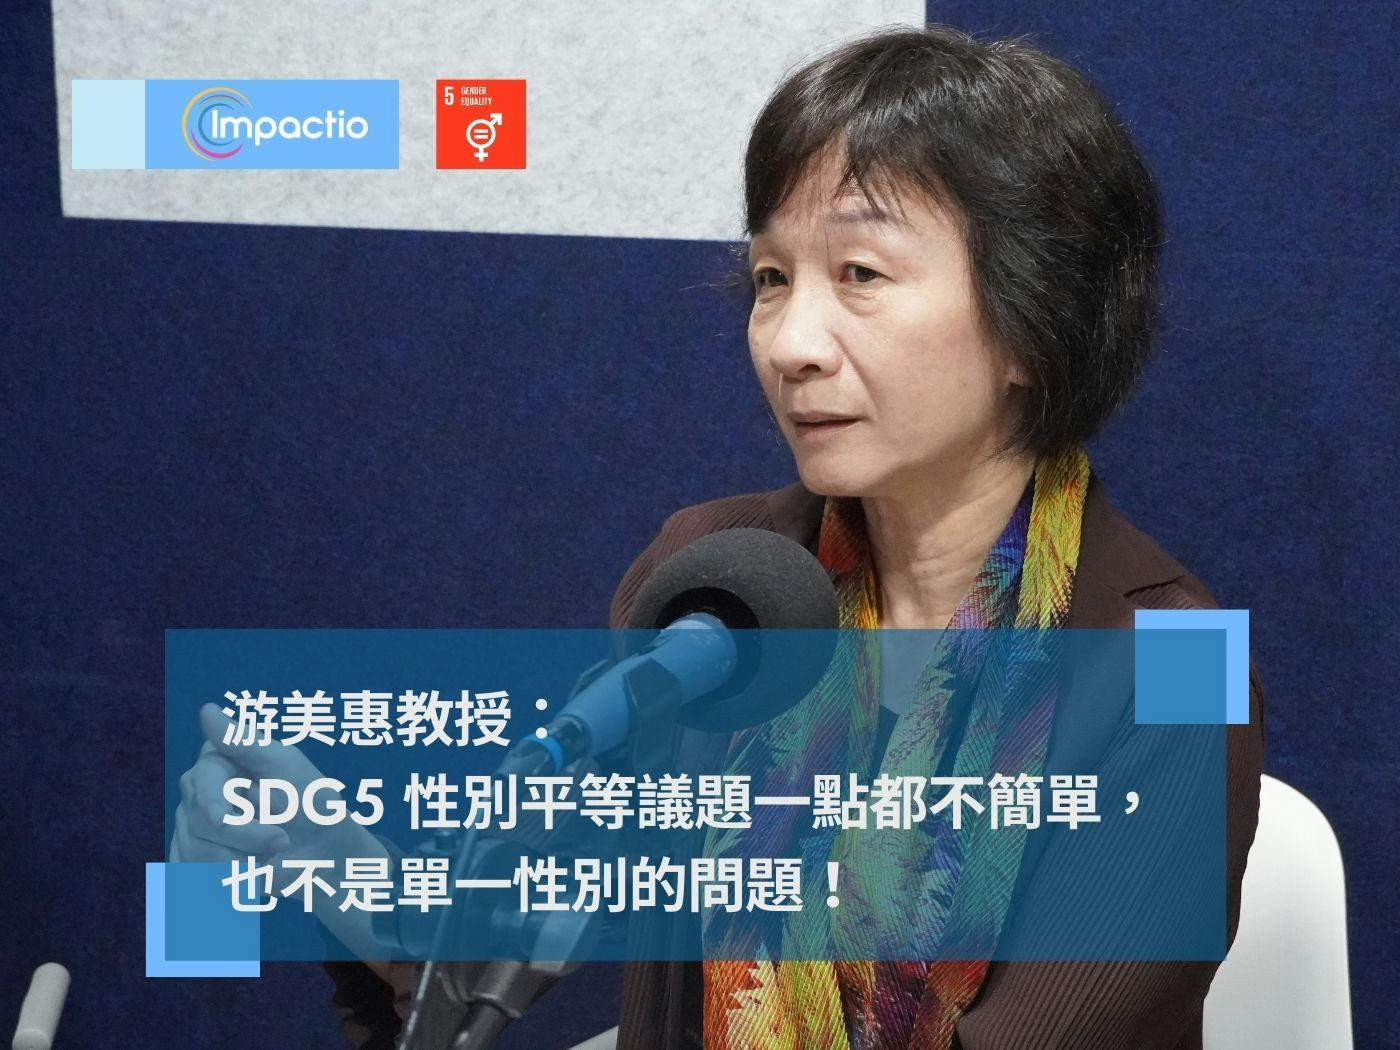 Impactio 游美惠教授：SDG5 性別平等議題一點都不簡單，也不是單一性別的問題！